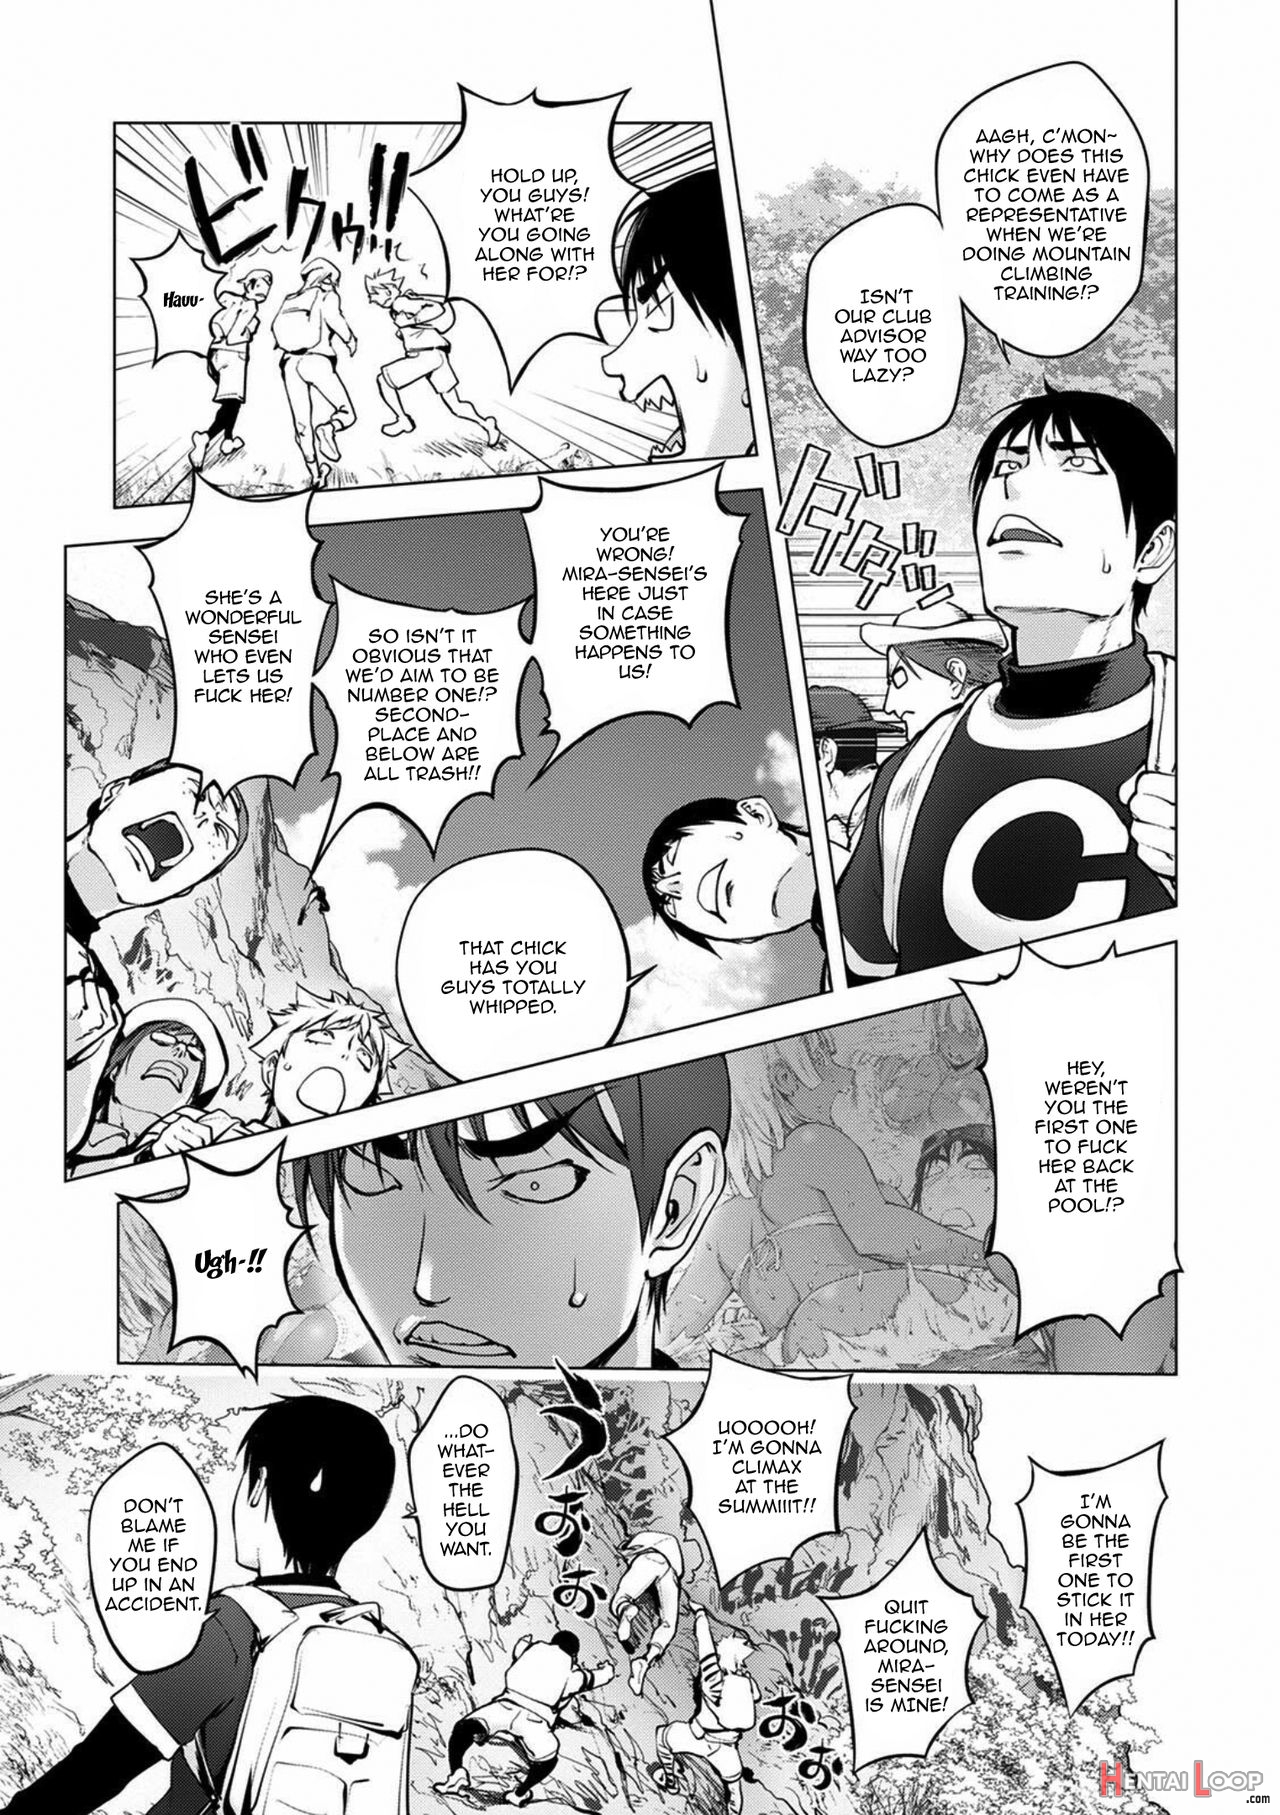 Mira-sensei's Cum page 3